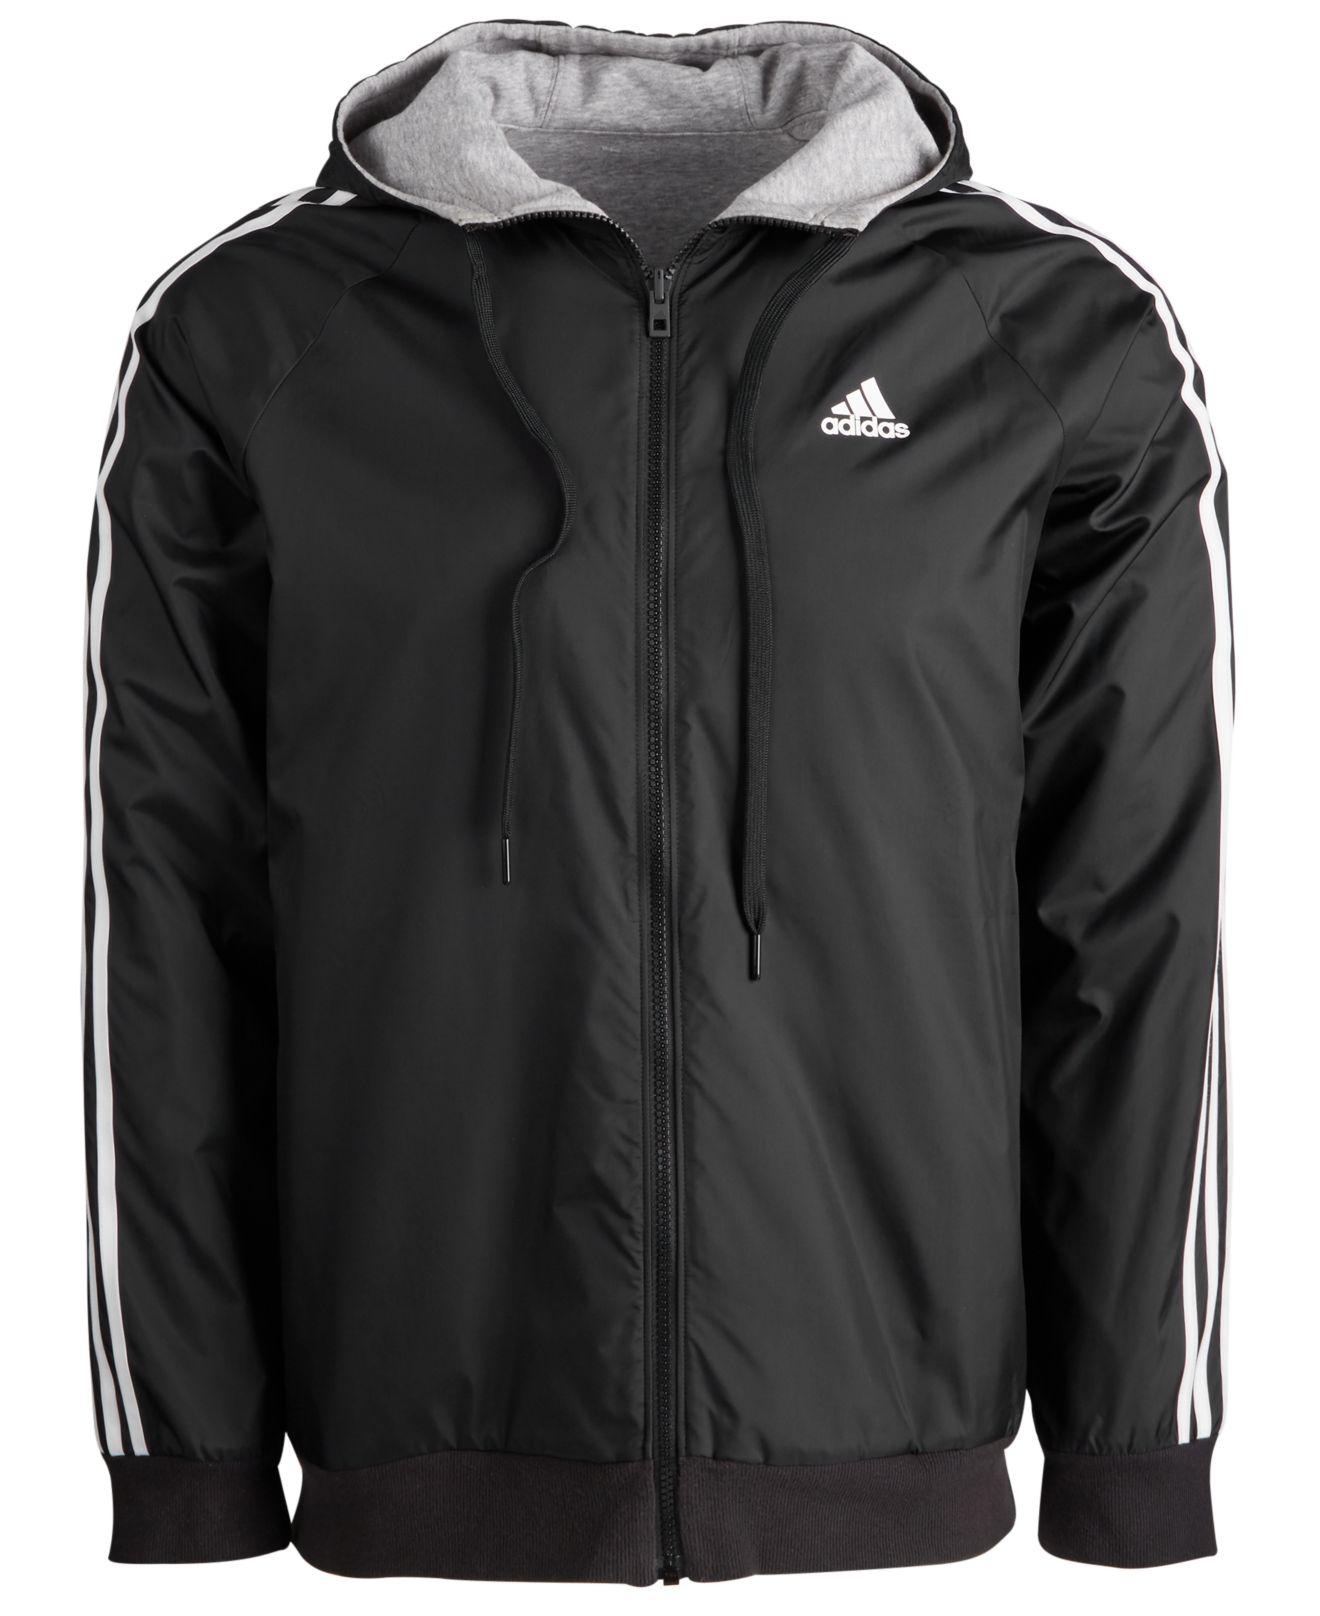 Buy adidas synthetic hooded jacket> OFF-68%